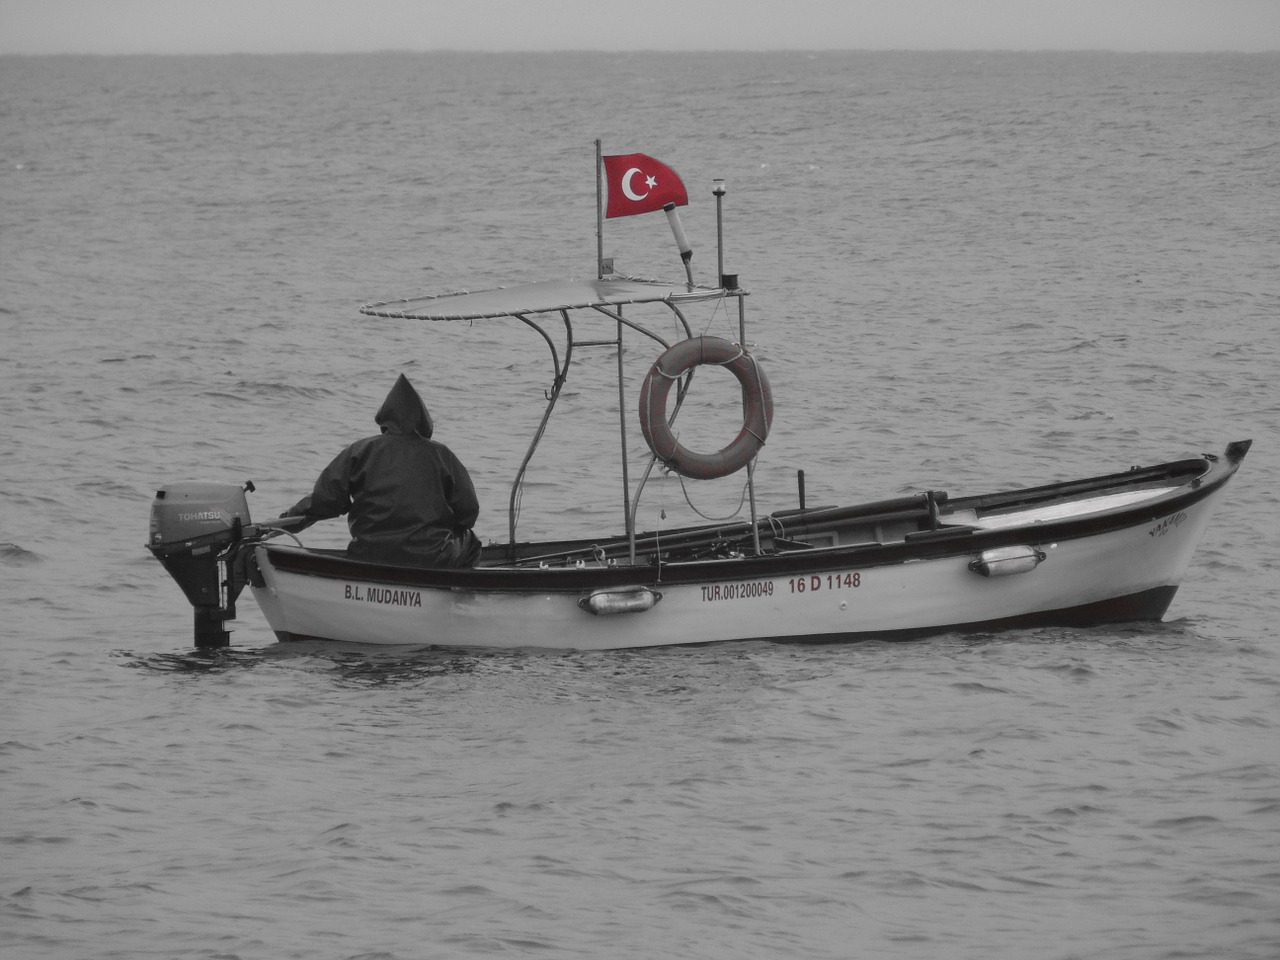 scholarship mudanya boat in turkish free photo